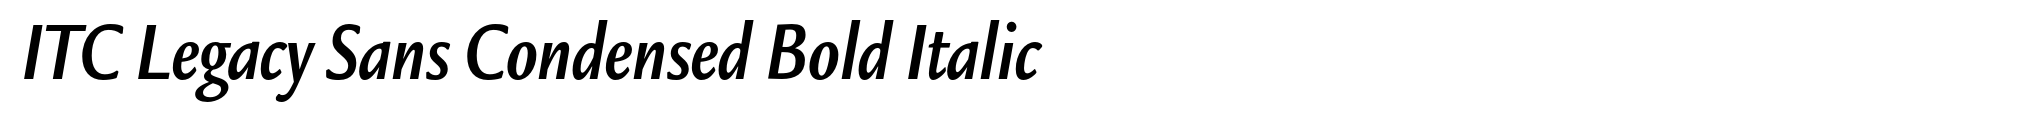 ITC Legacy Sans Condensed Bold Italic image